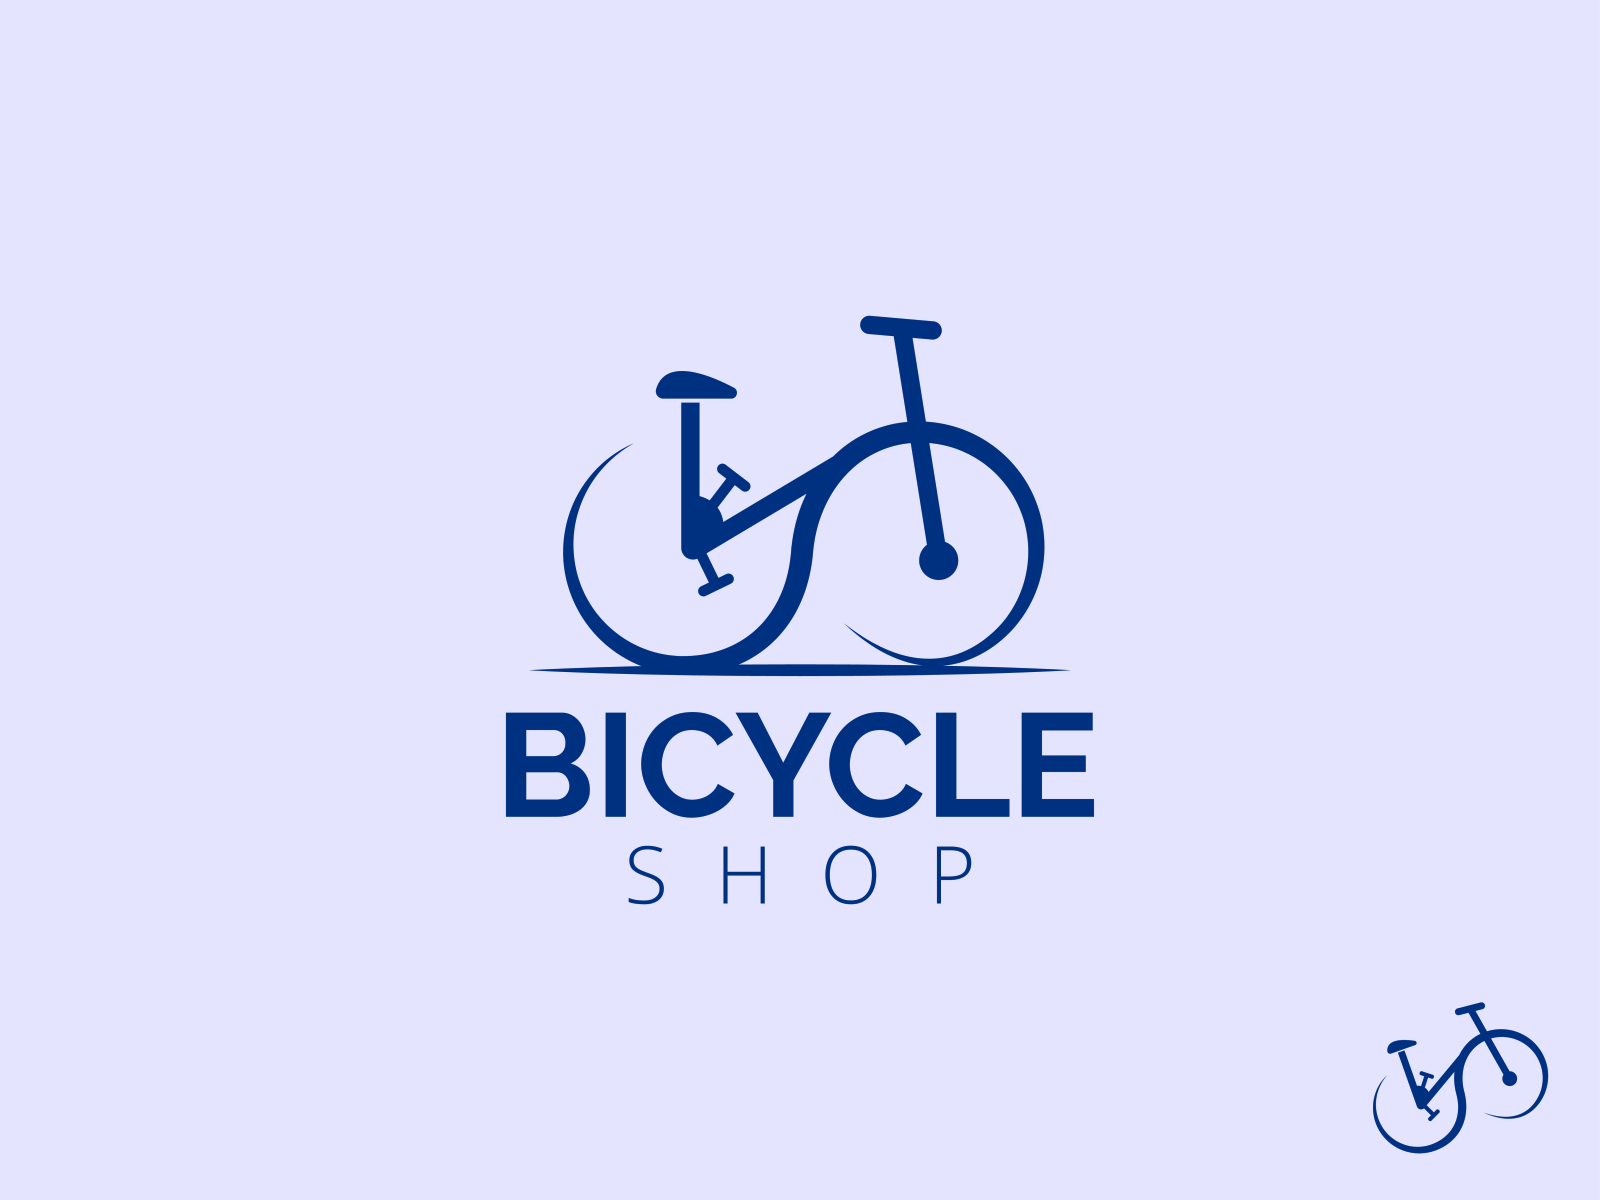 Car Or Bike Workshop Logo